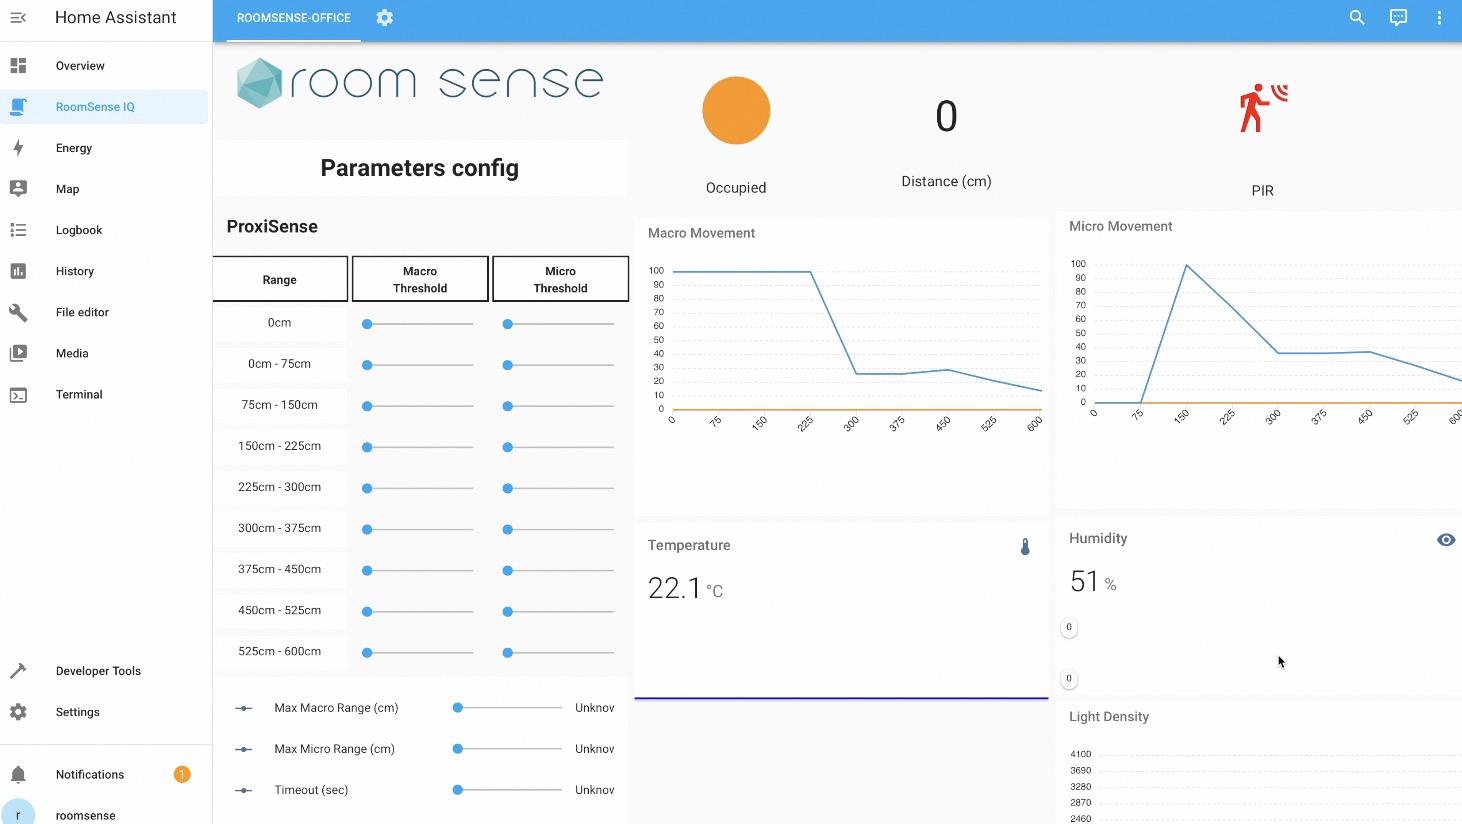 5-in-1 Human Presence Sensor - RoomSense IQ 13